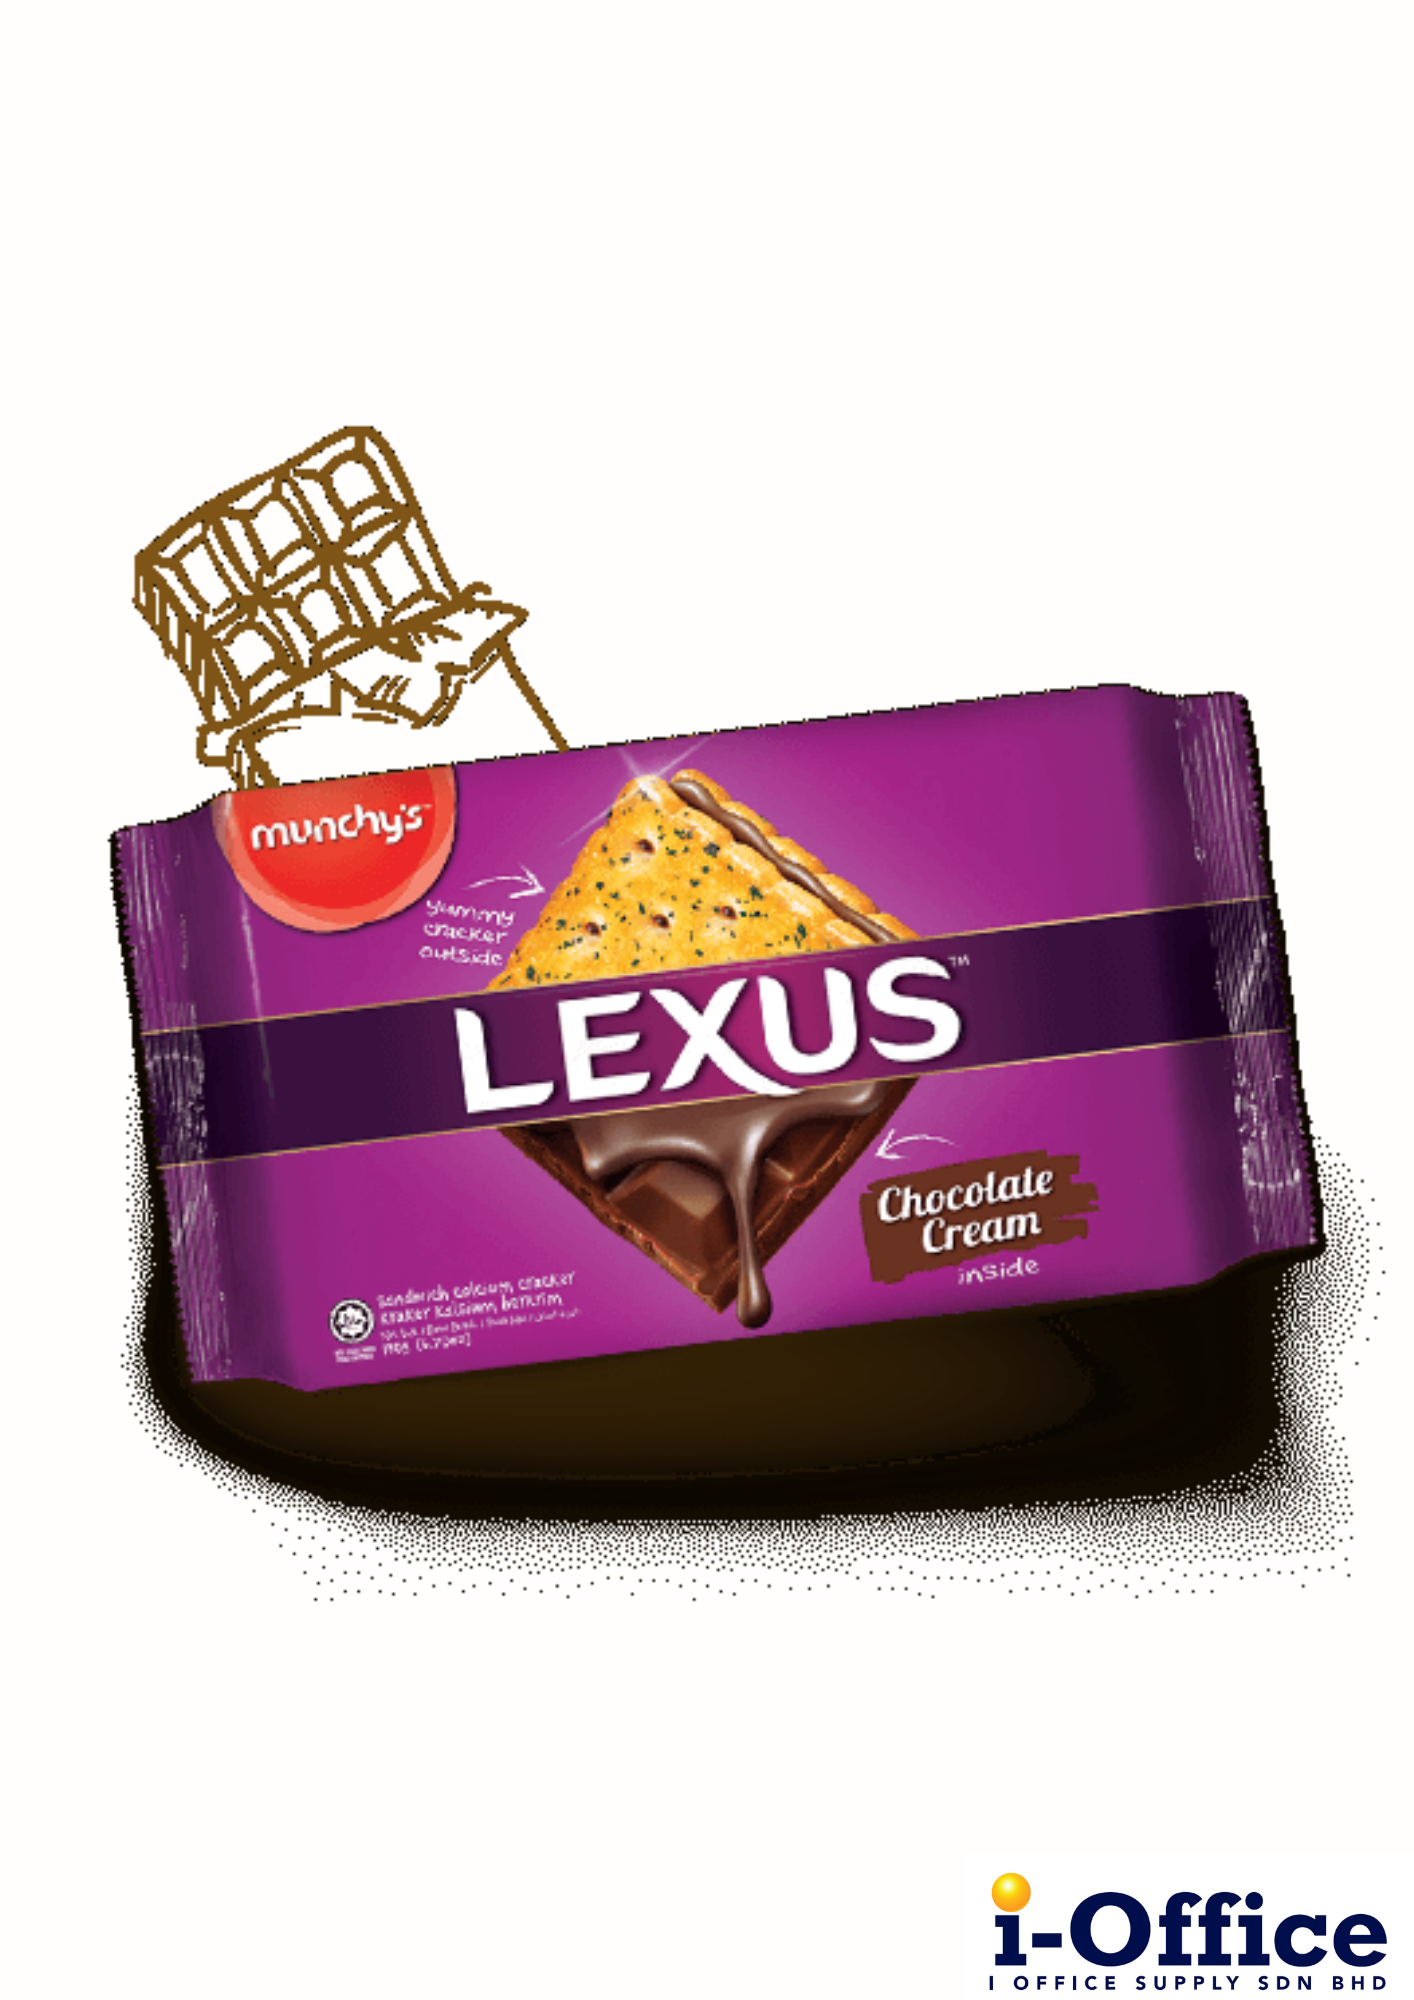 Munchy's Lexus Chocolate Cream Sandwich Calcium Crakcer 190g